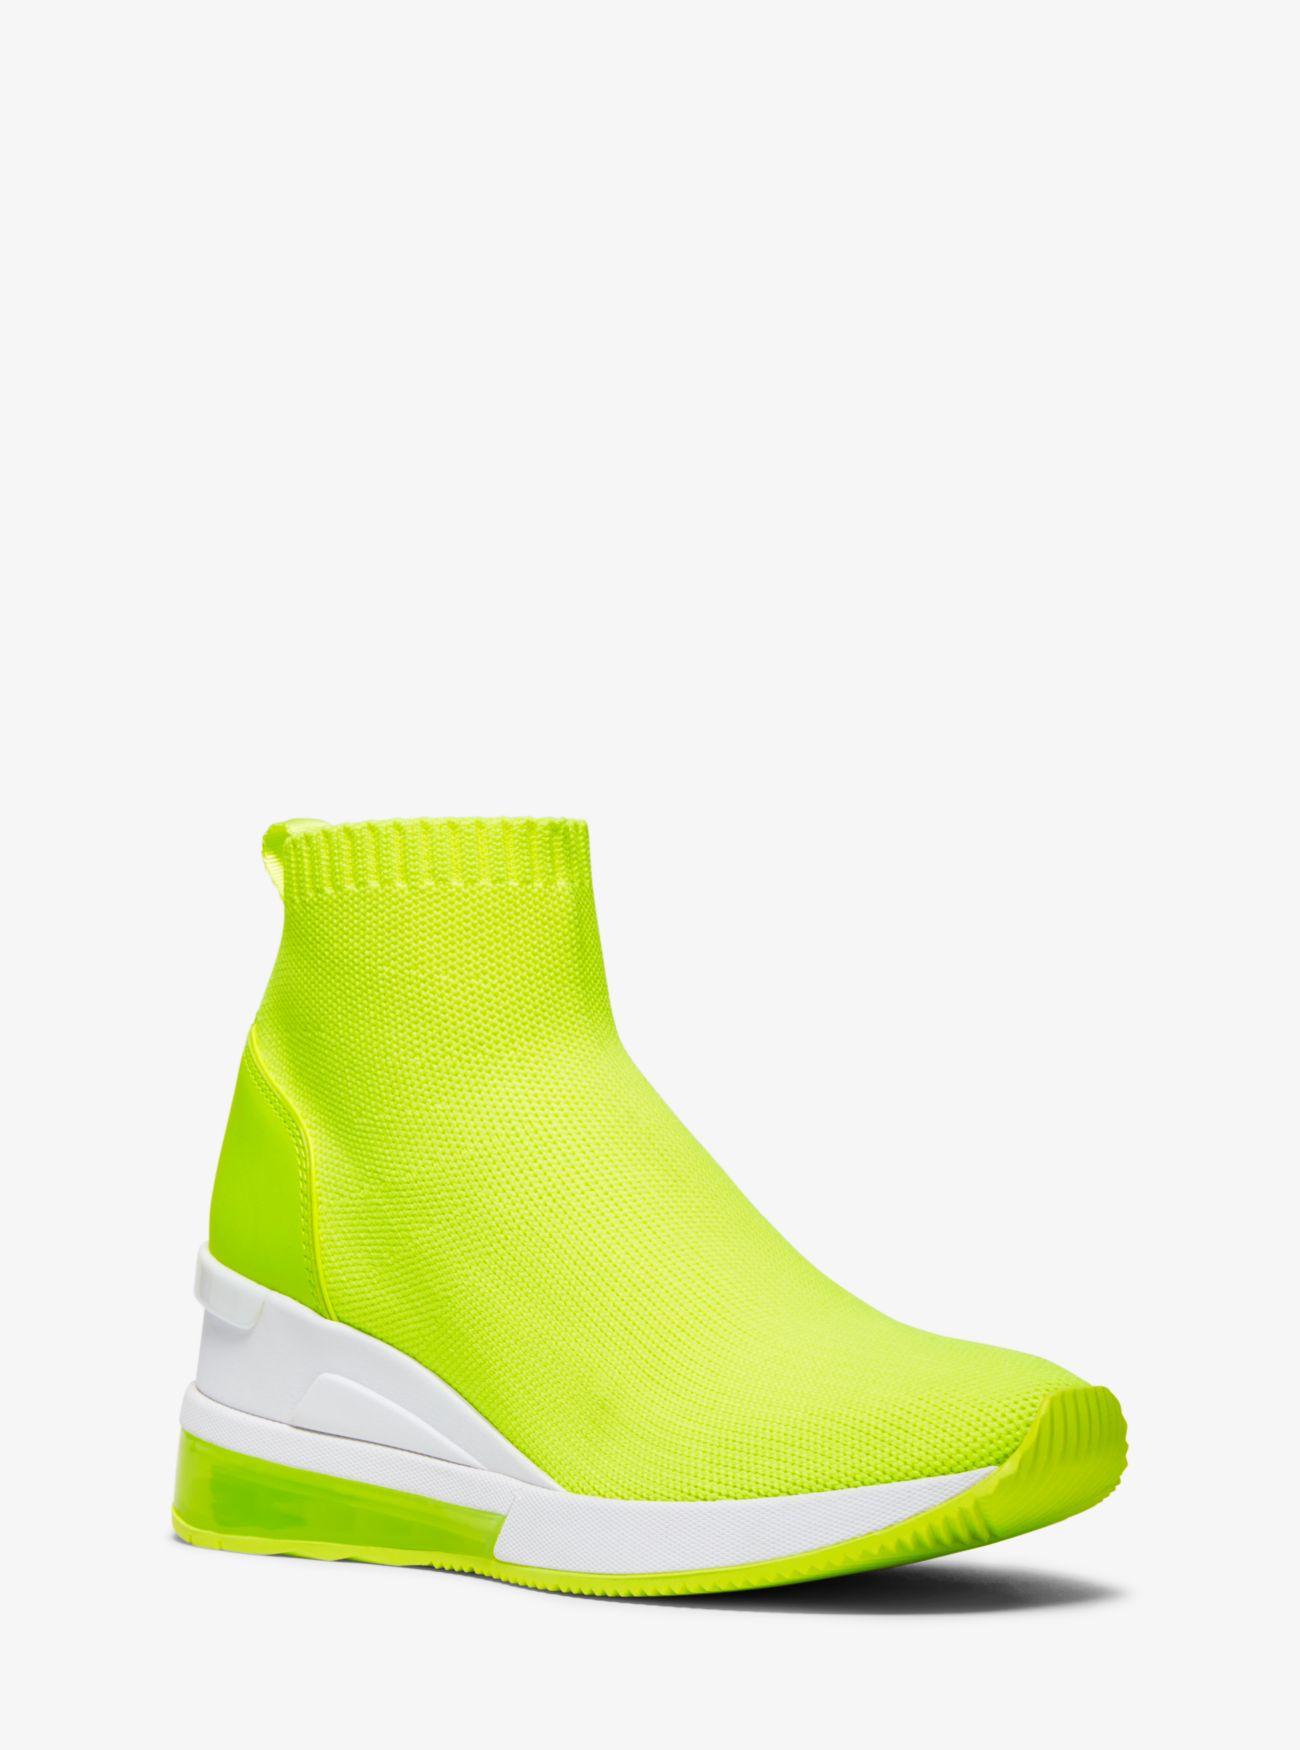 neon sock sneakers